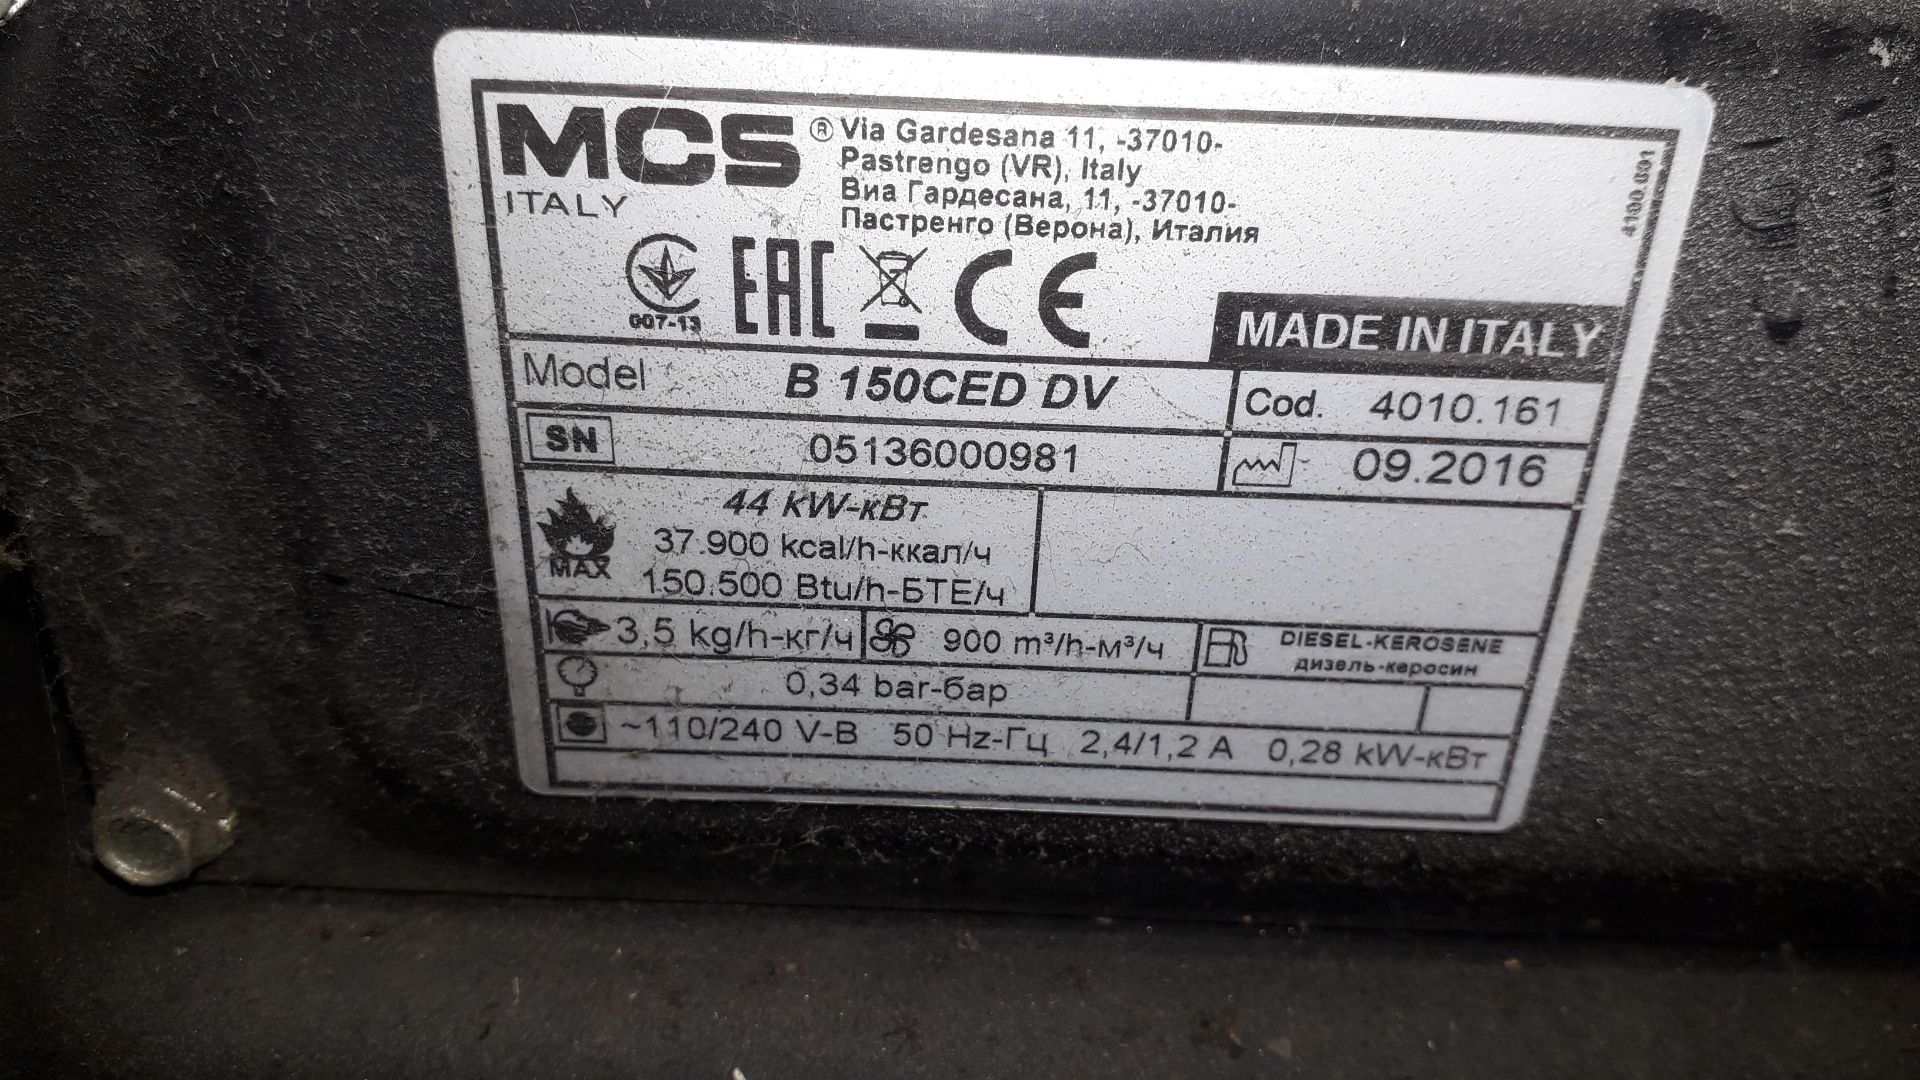 MCS Master B150CEDDU Diesel Fired Space Heater (2016) - Image 3 of 3